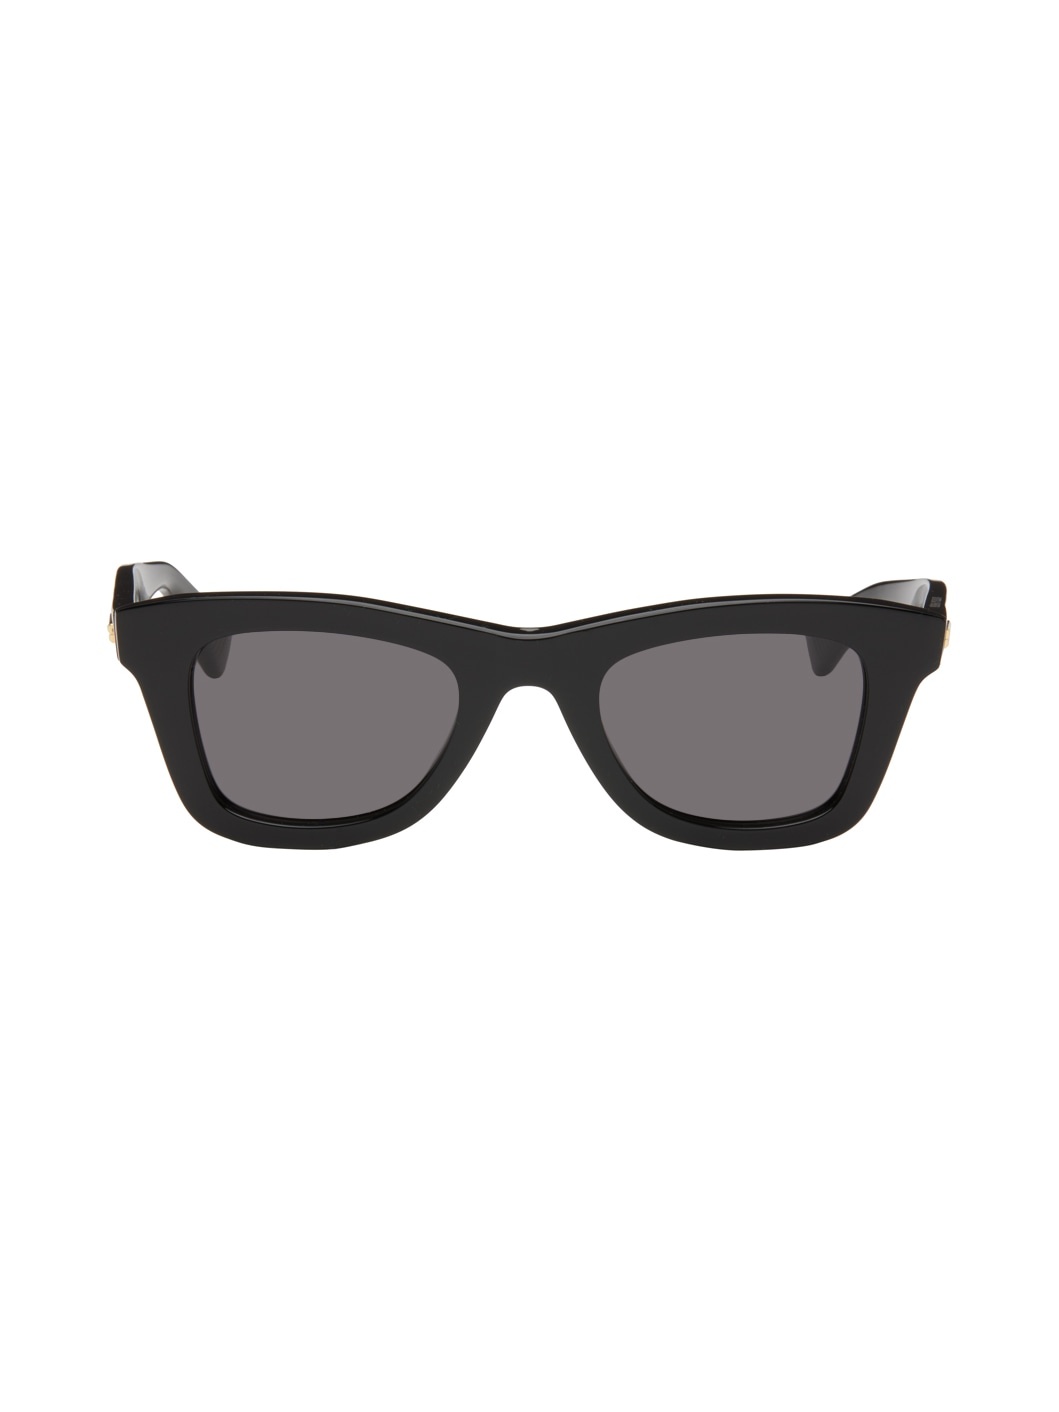 Black Square Sunglasses - 1